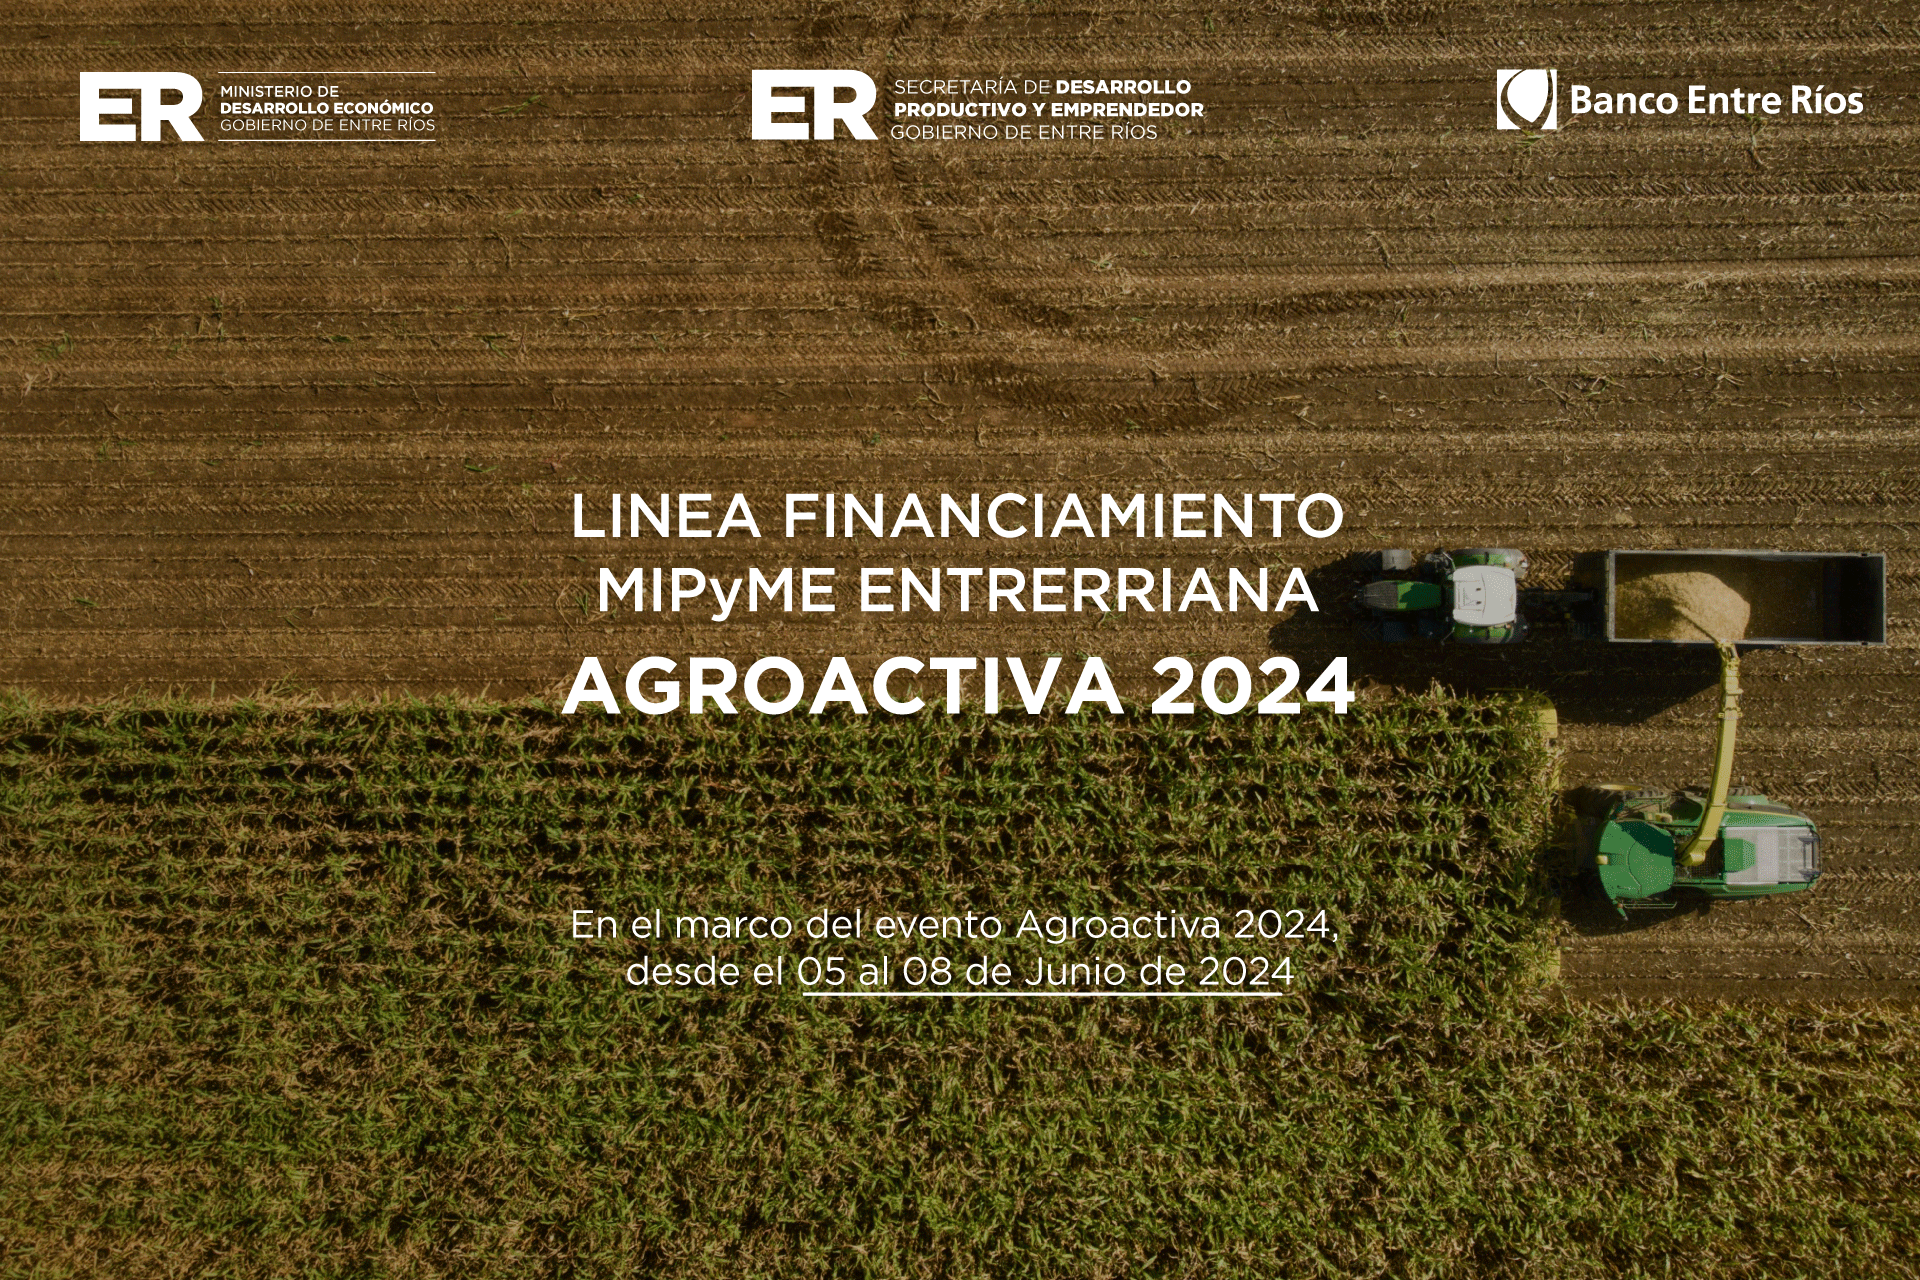 LINEA FINANCIAMIENTO MIPyME ENTRERRIANA AGROACTIVA 2024